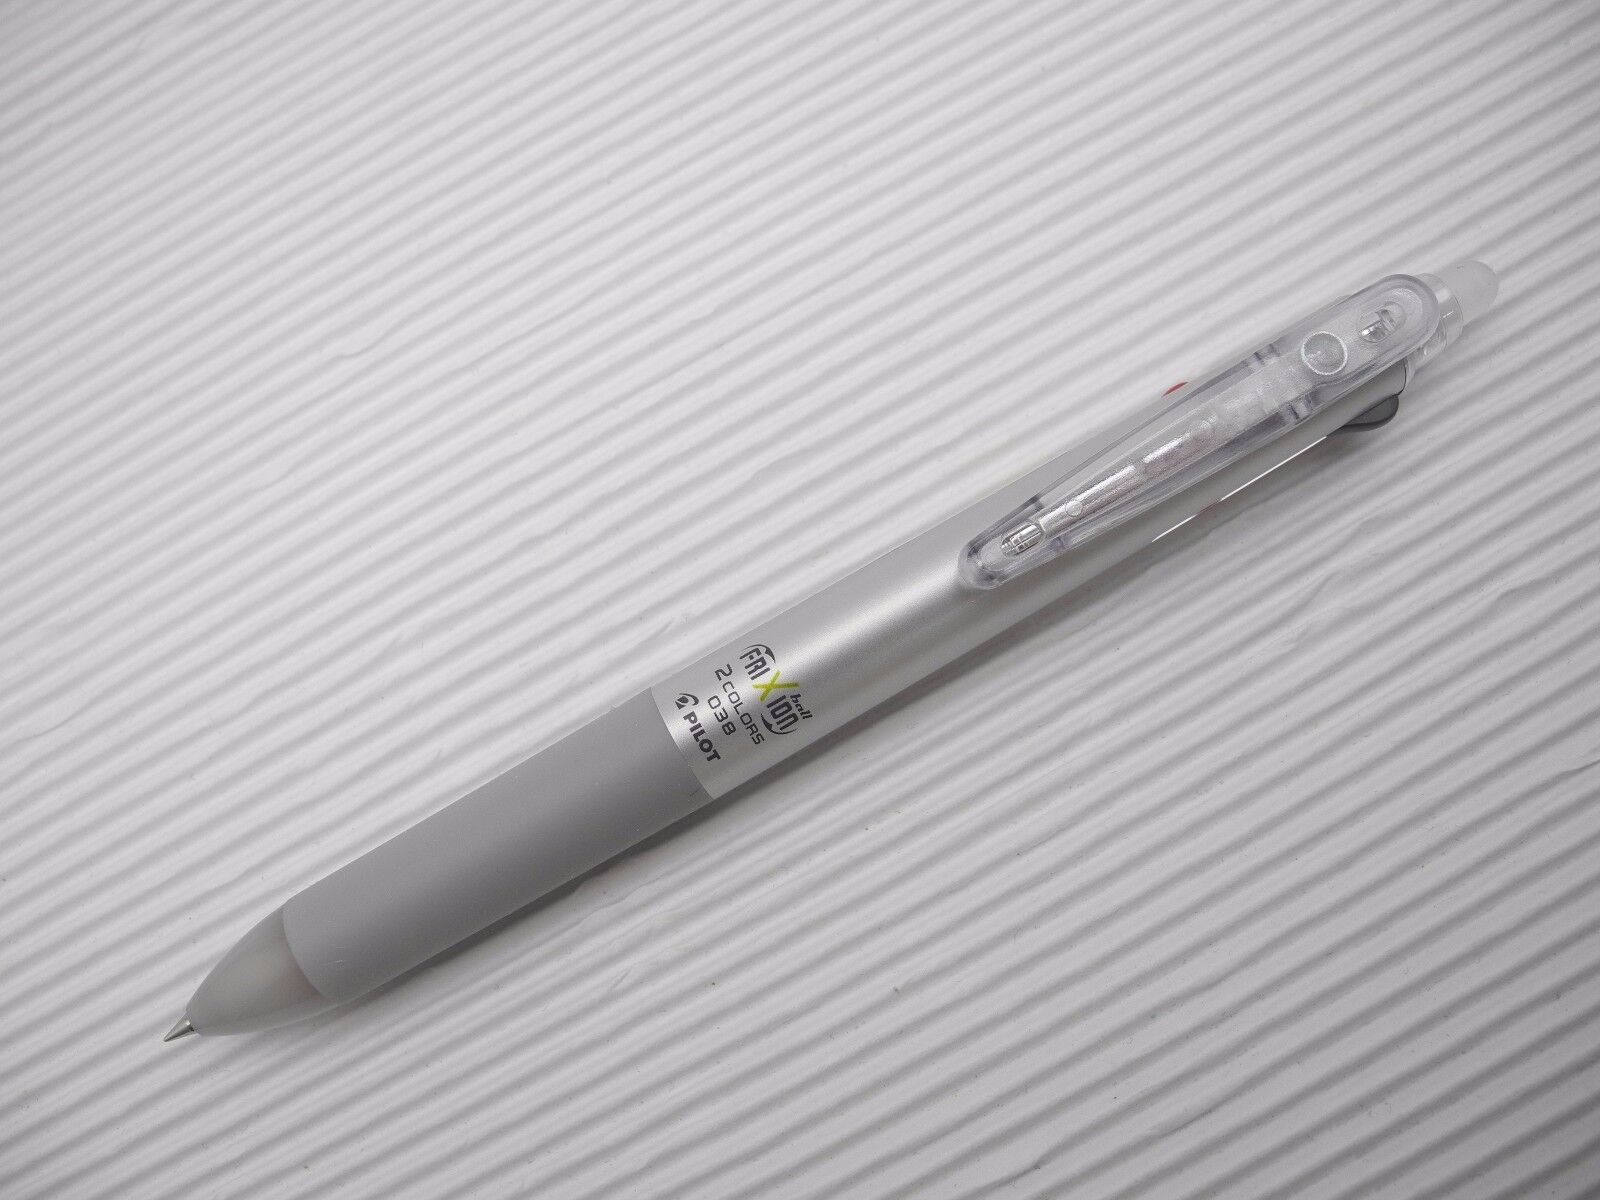 1 x Sliver Pilot FRIXION/ERASER LKFB-40UF Ball 2 0.38mm roller ball pen(Japan